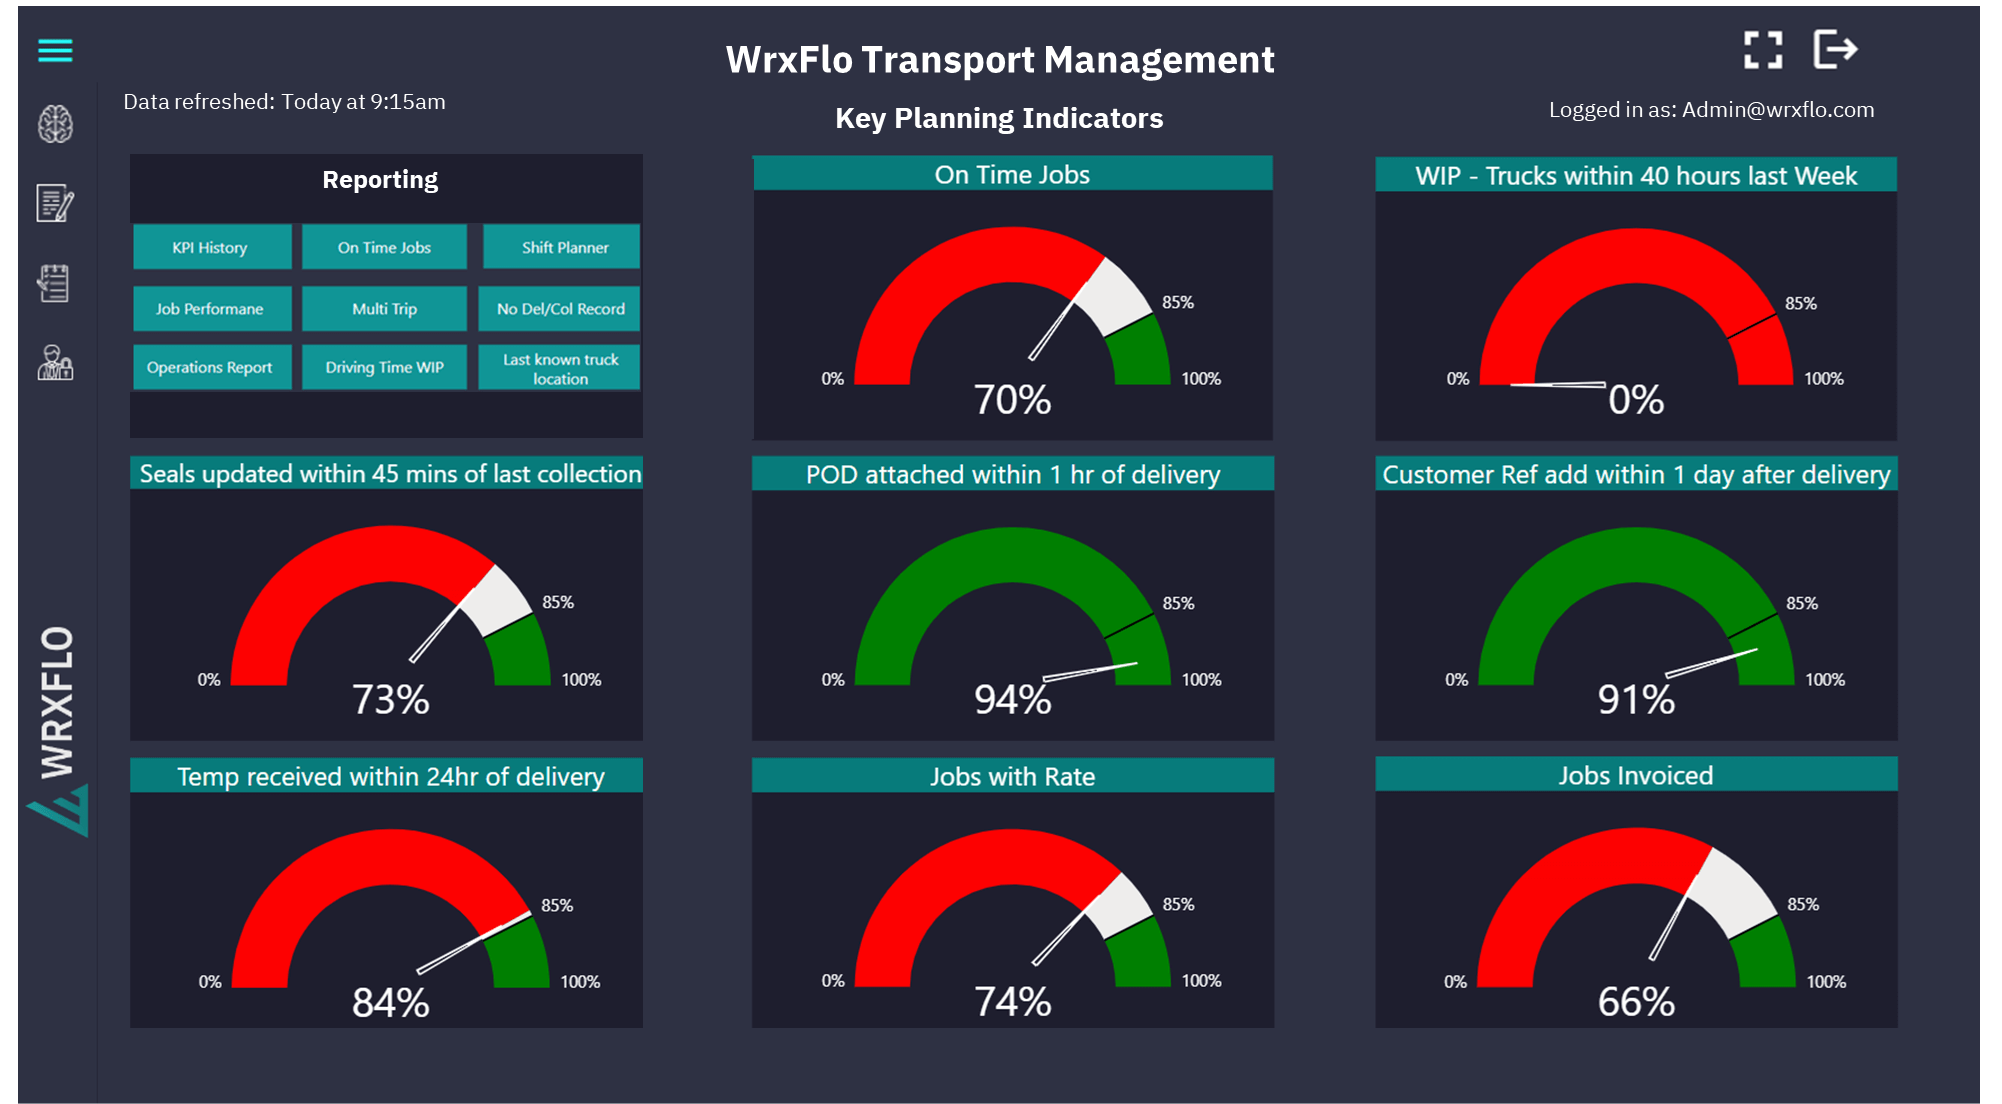 WrxFlo Transport Management